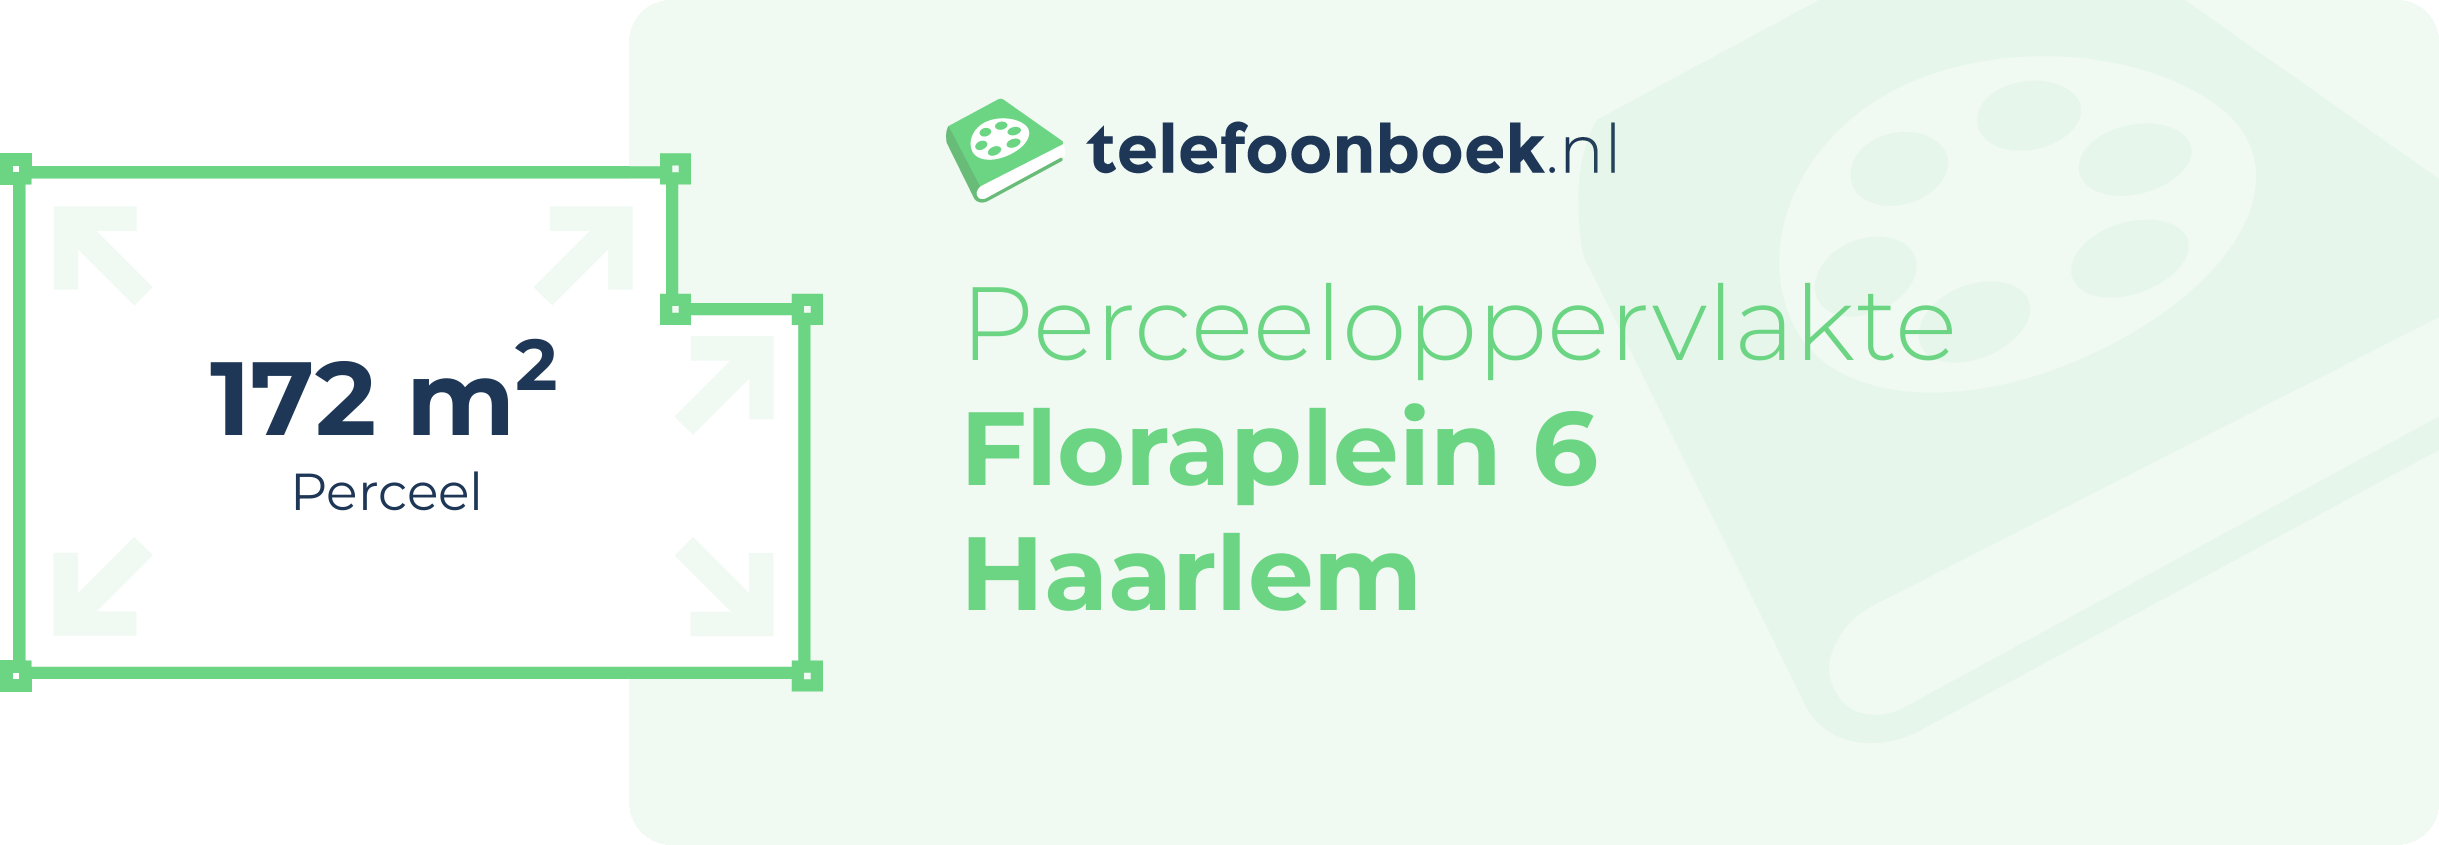 Perceeloppervlakte Floraplein 6 Haarlem